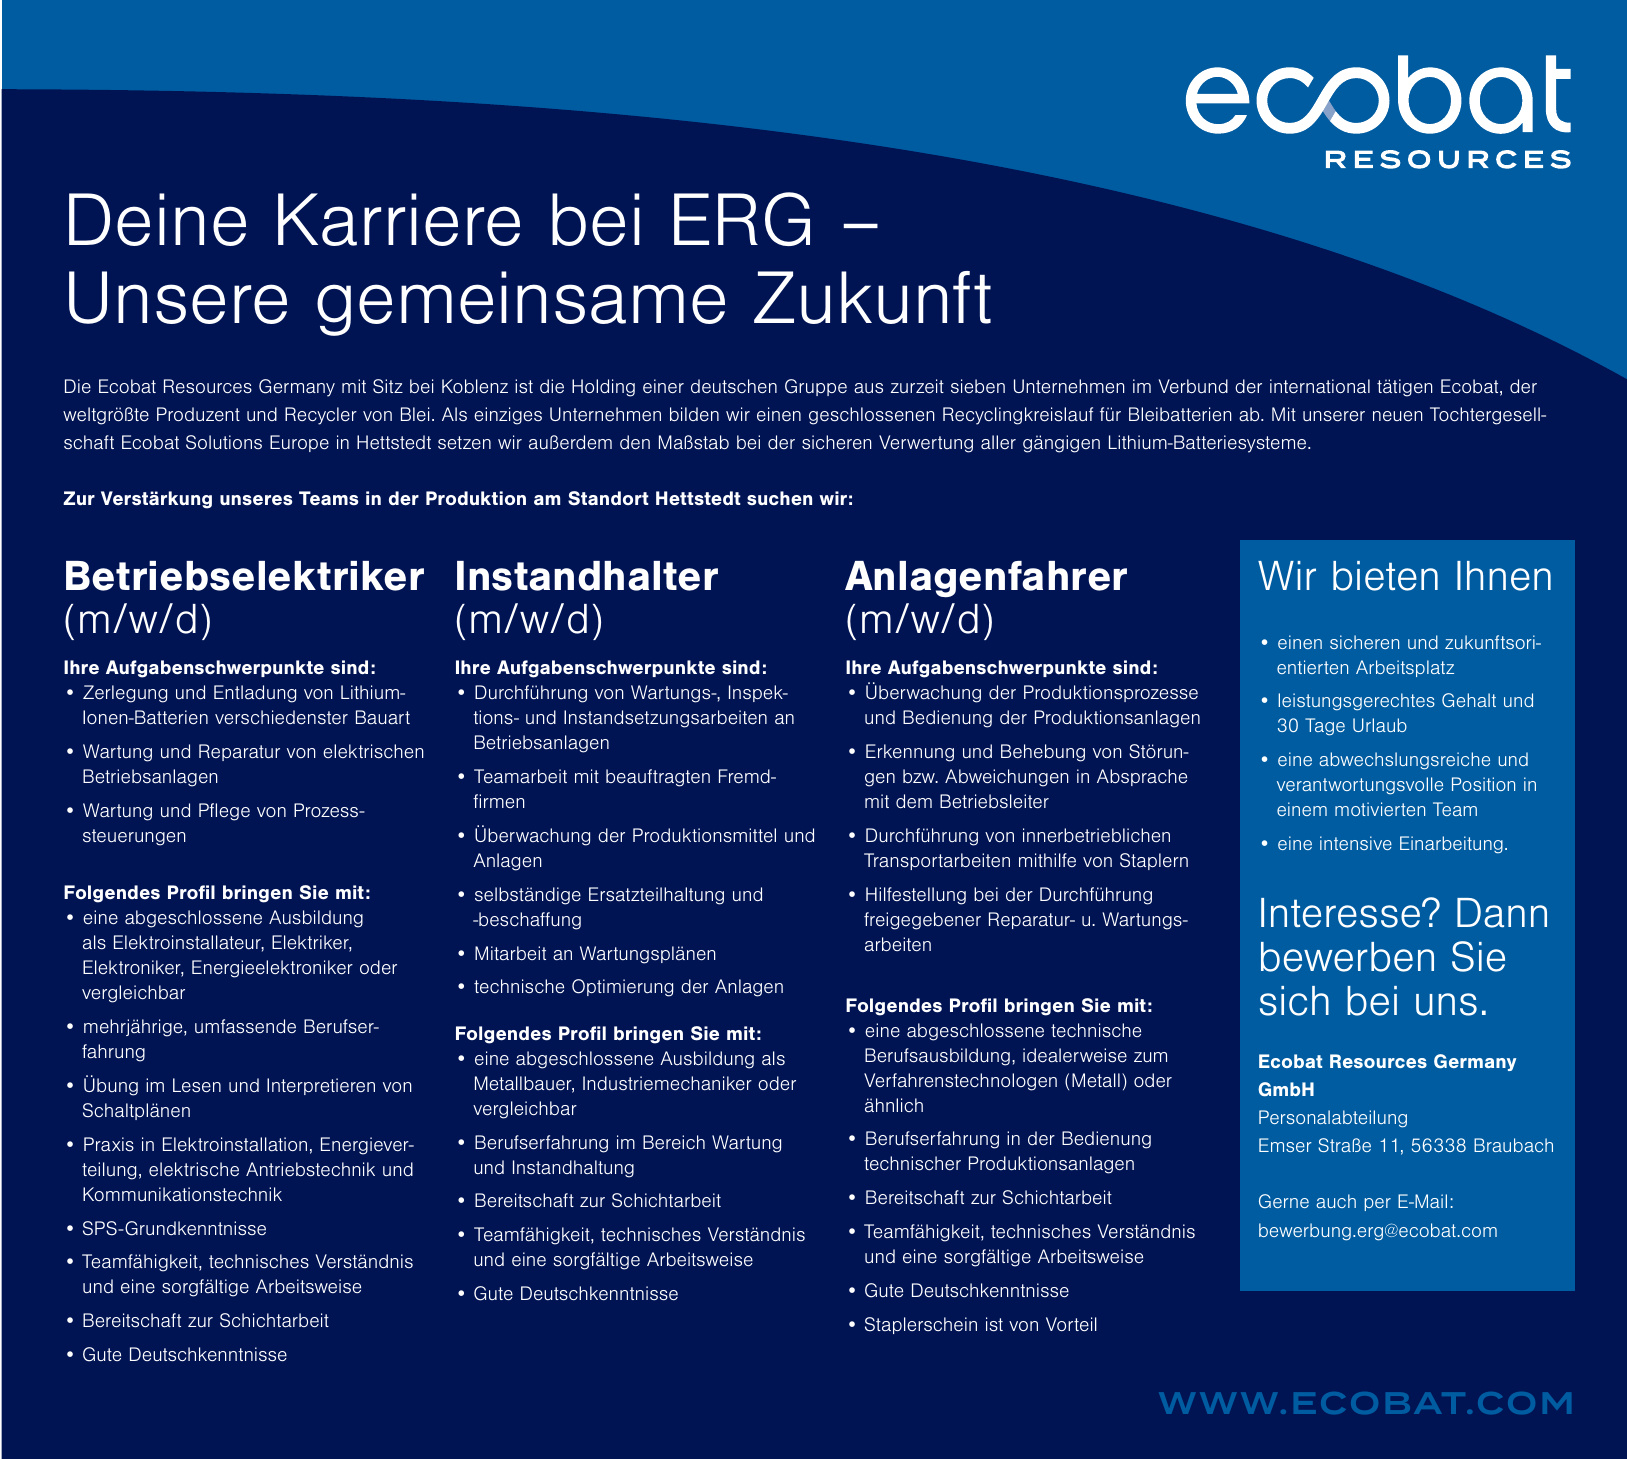 Ecobat Resources Germany GmbH